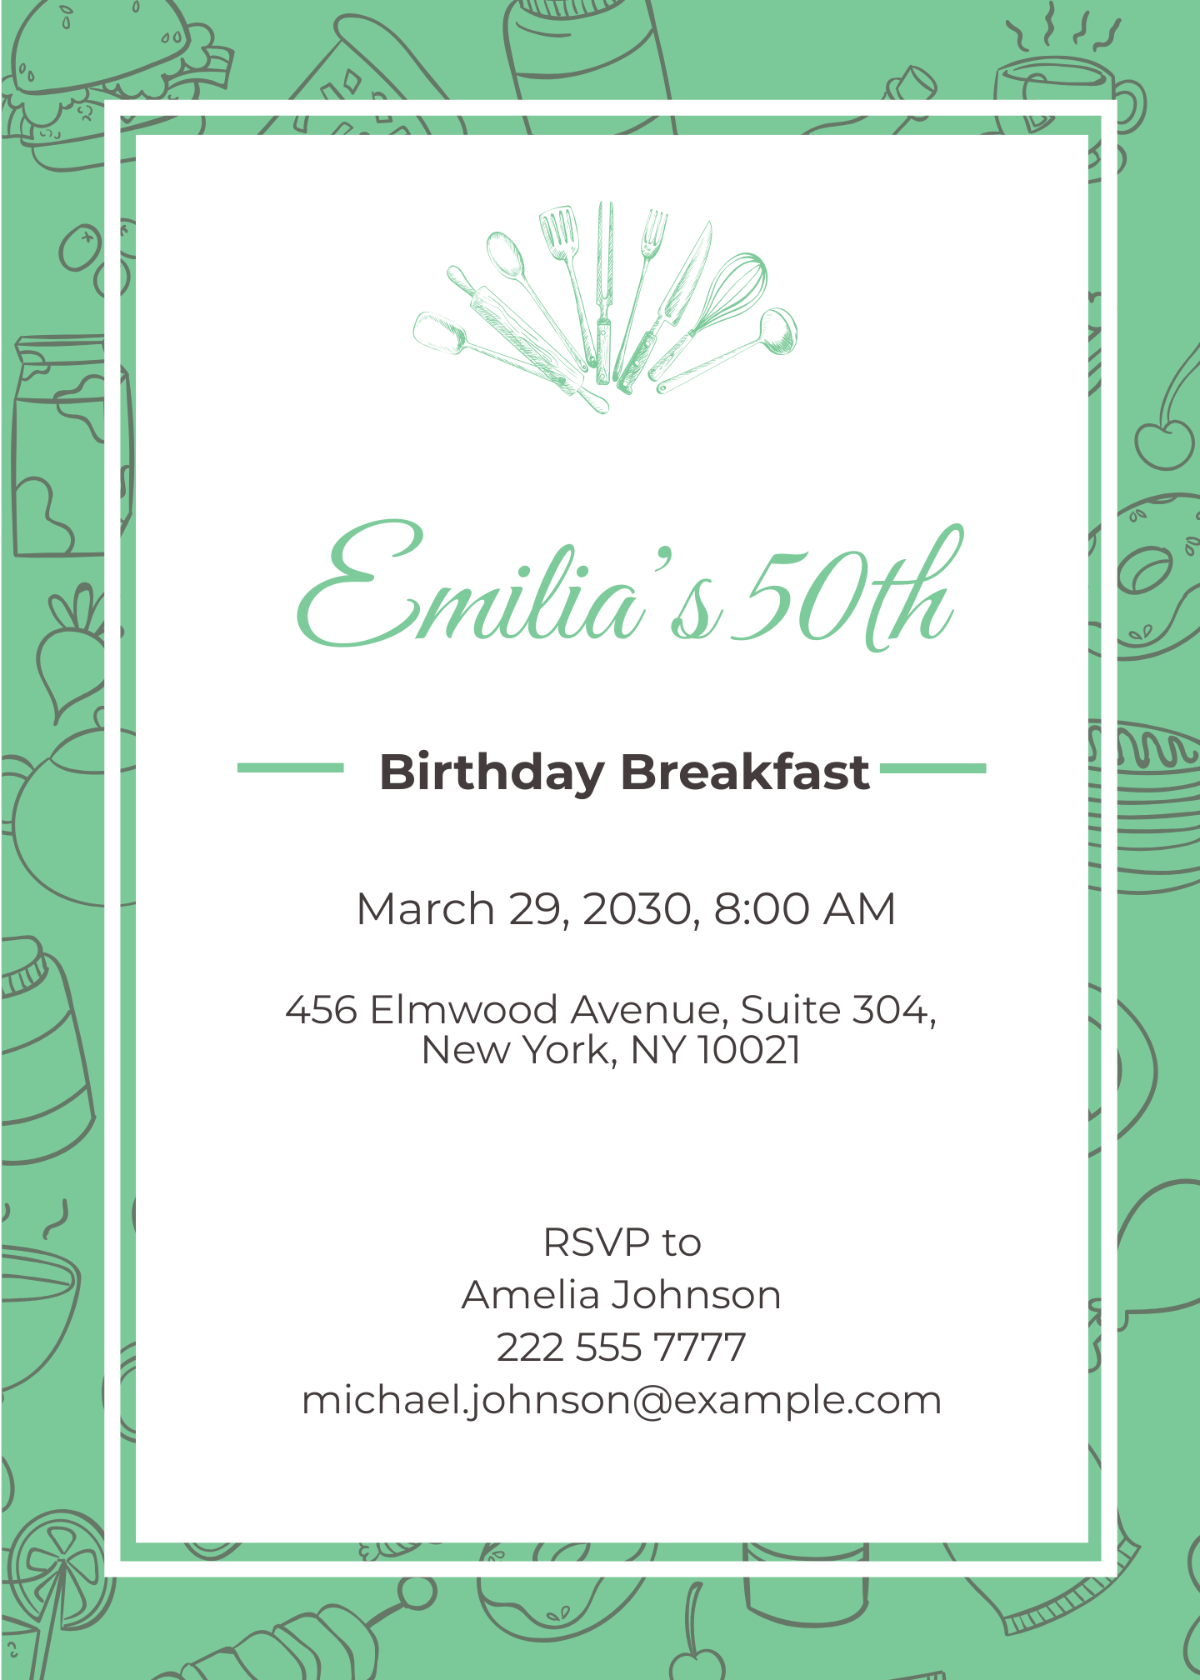 Birthday Breakfast Invitation